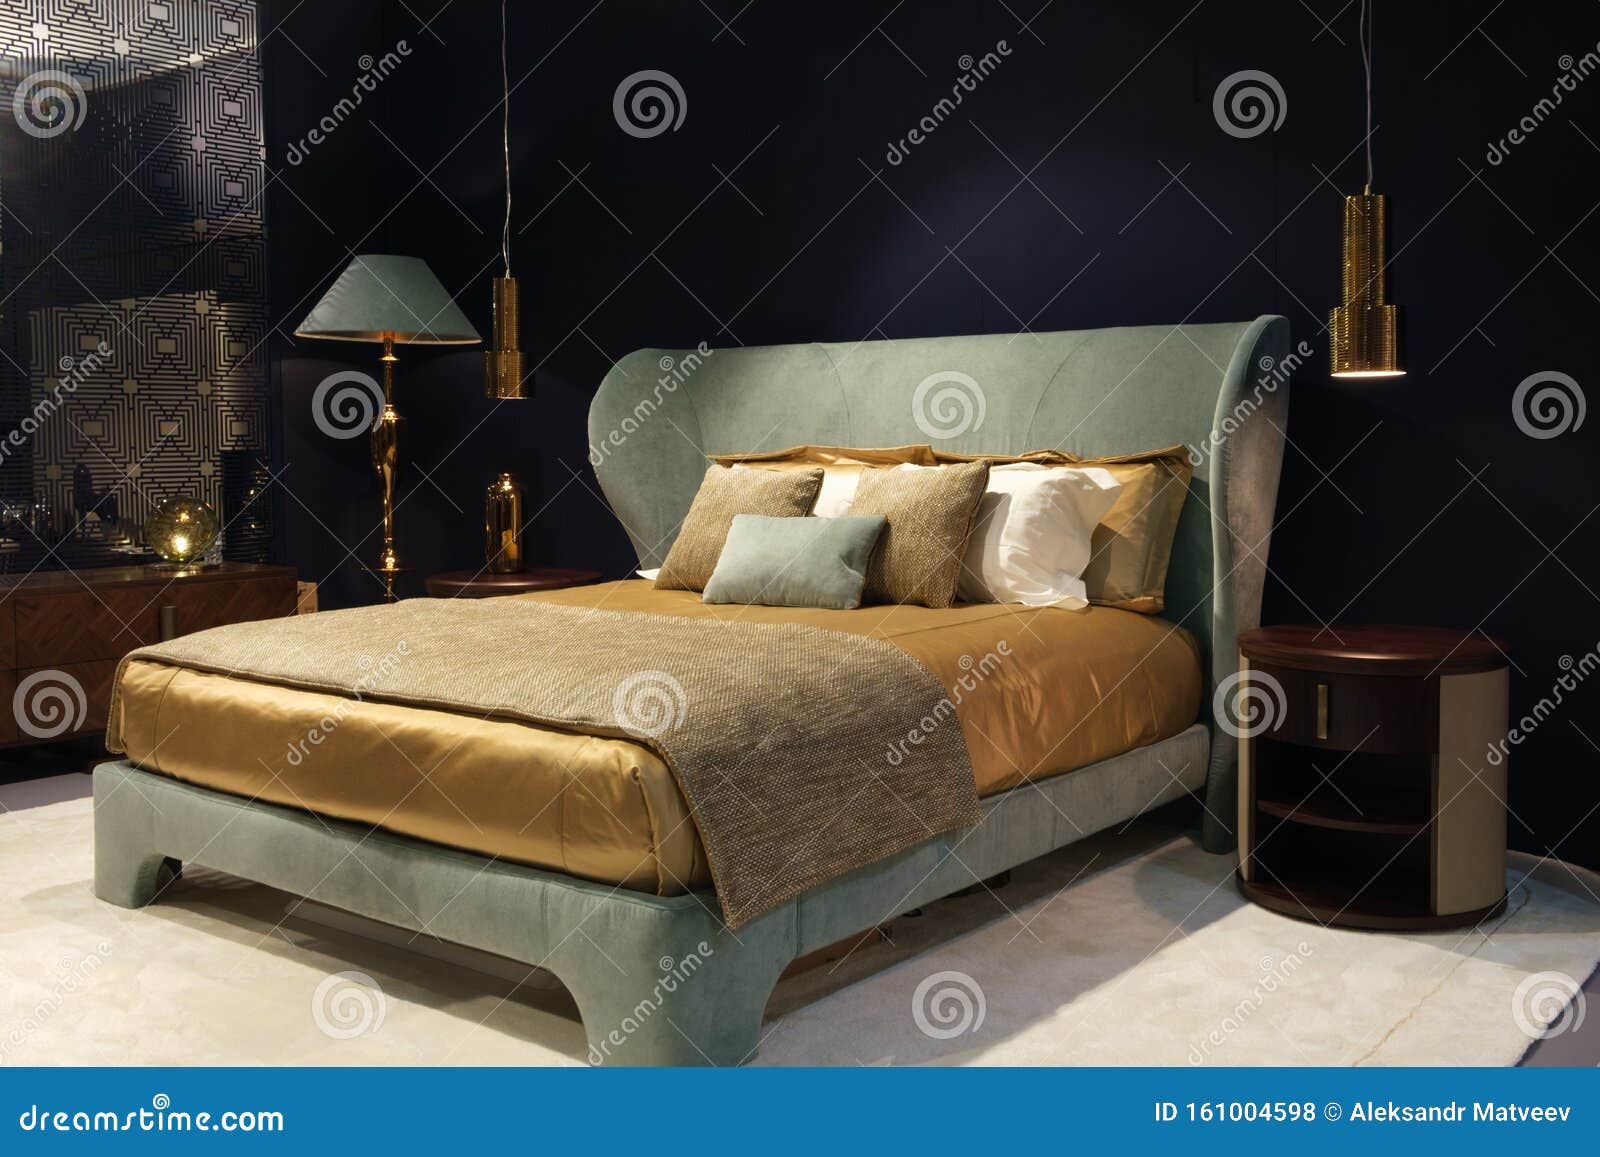 Luxury Modern Dark Blue Style Bedroom Interior Of A Hotel Bedroom Stock Photo Image Of Interior Hotel 161004598